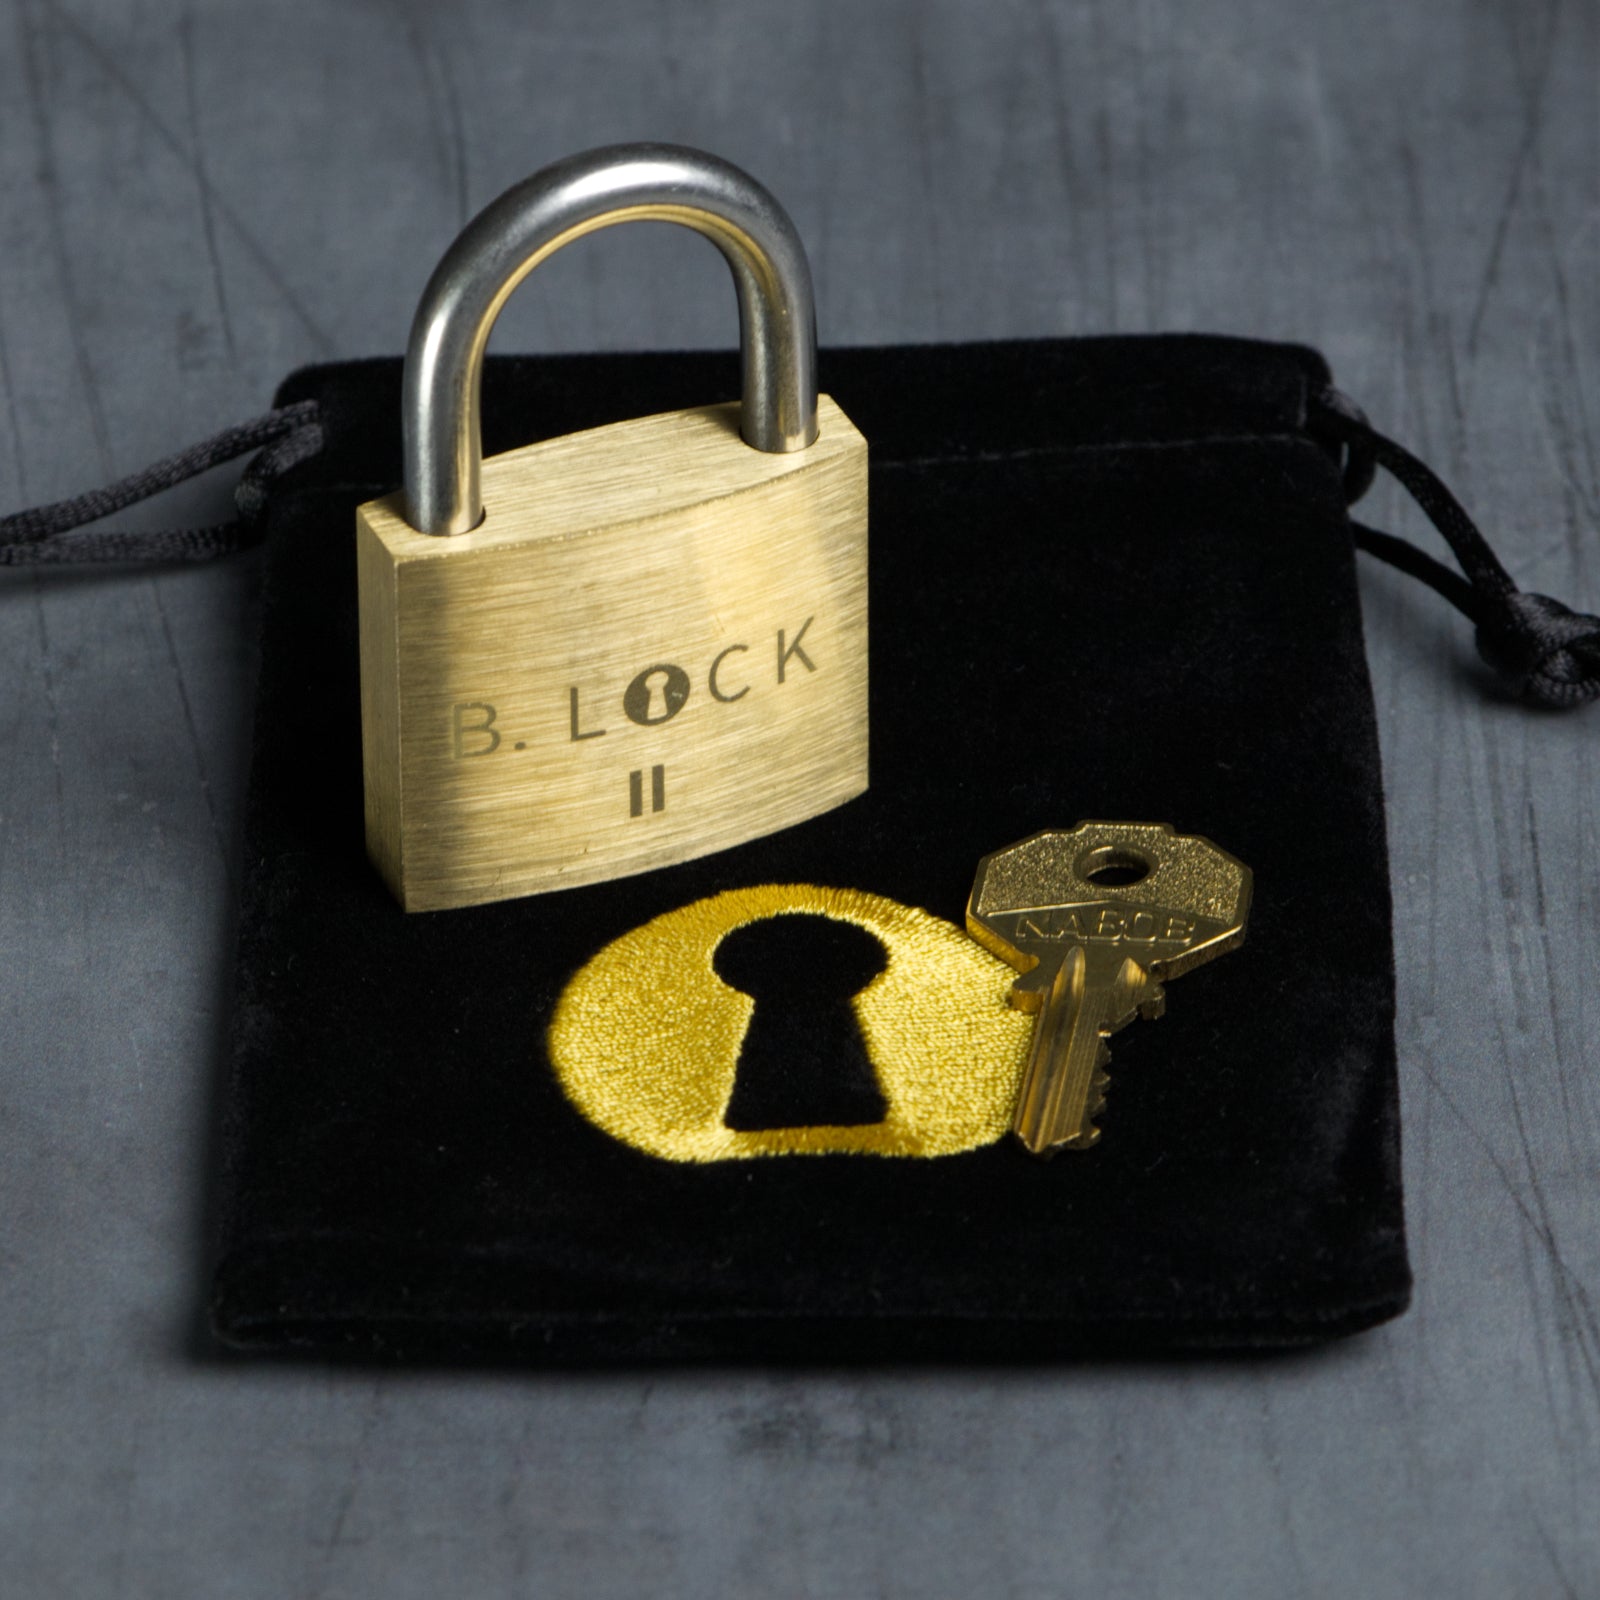 B-Lock II - Level 5 - Puzzlocks - Boaz Feldman